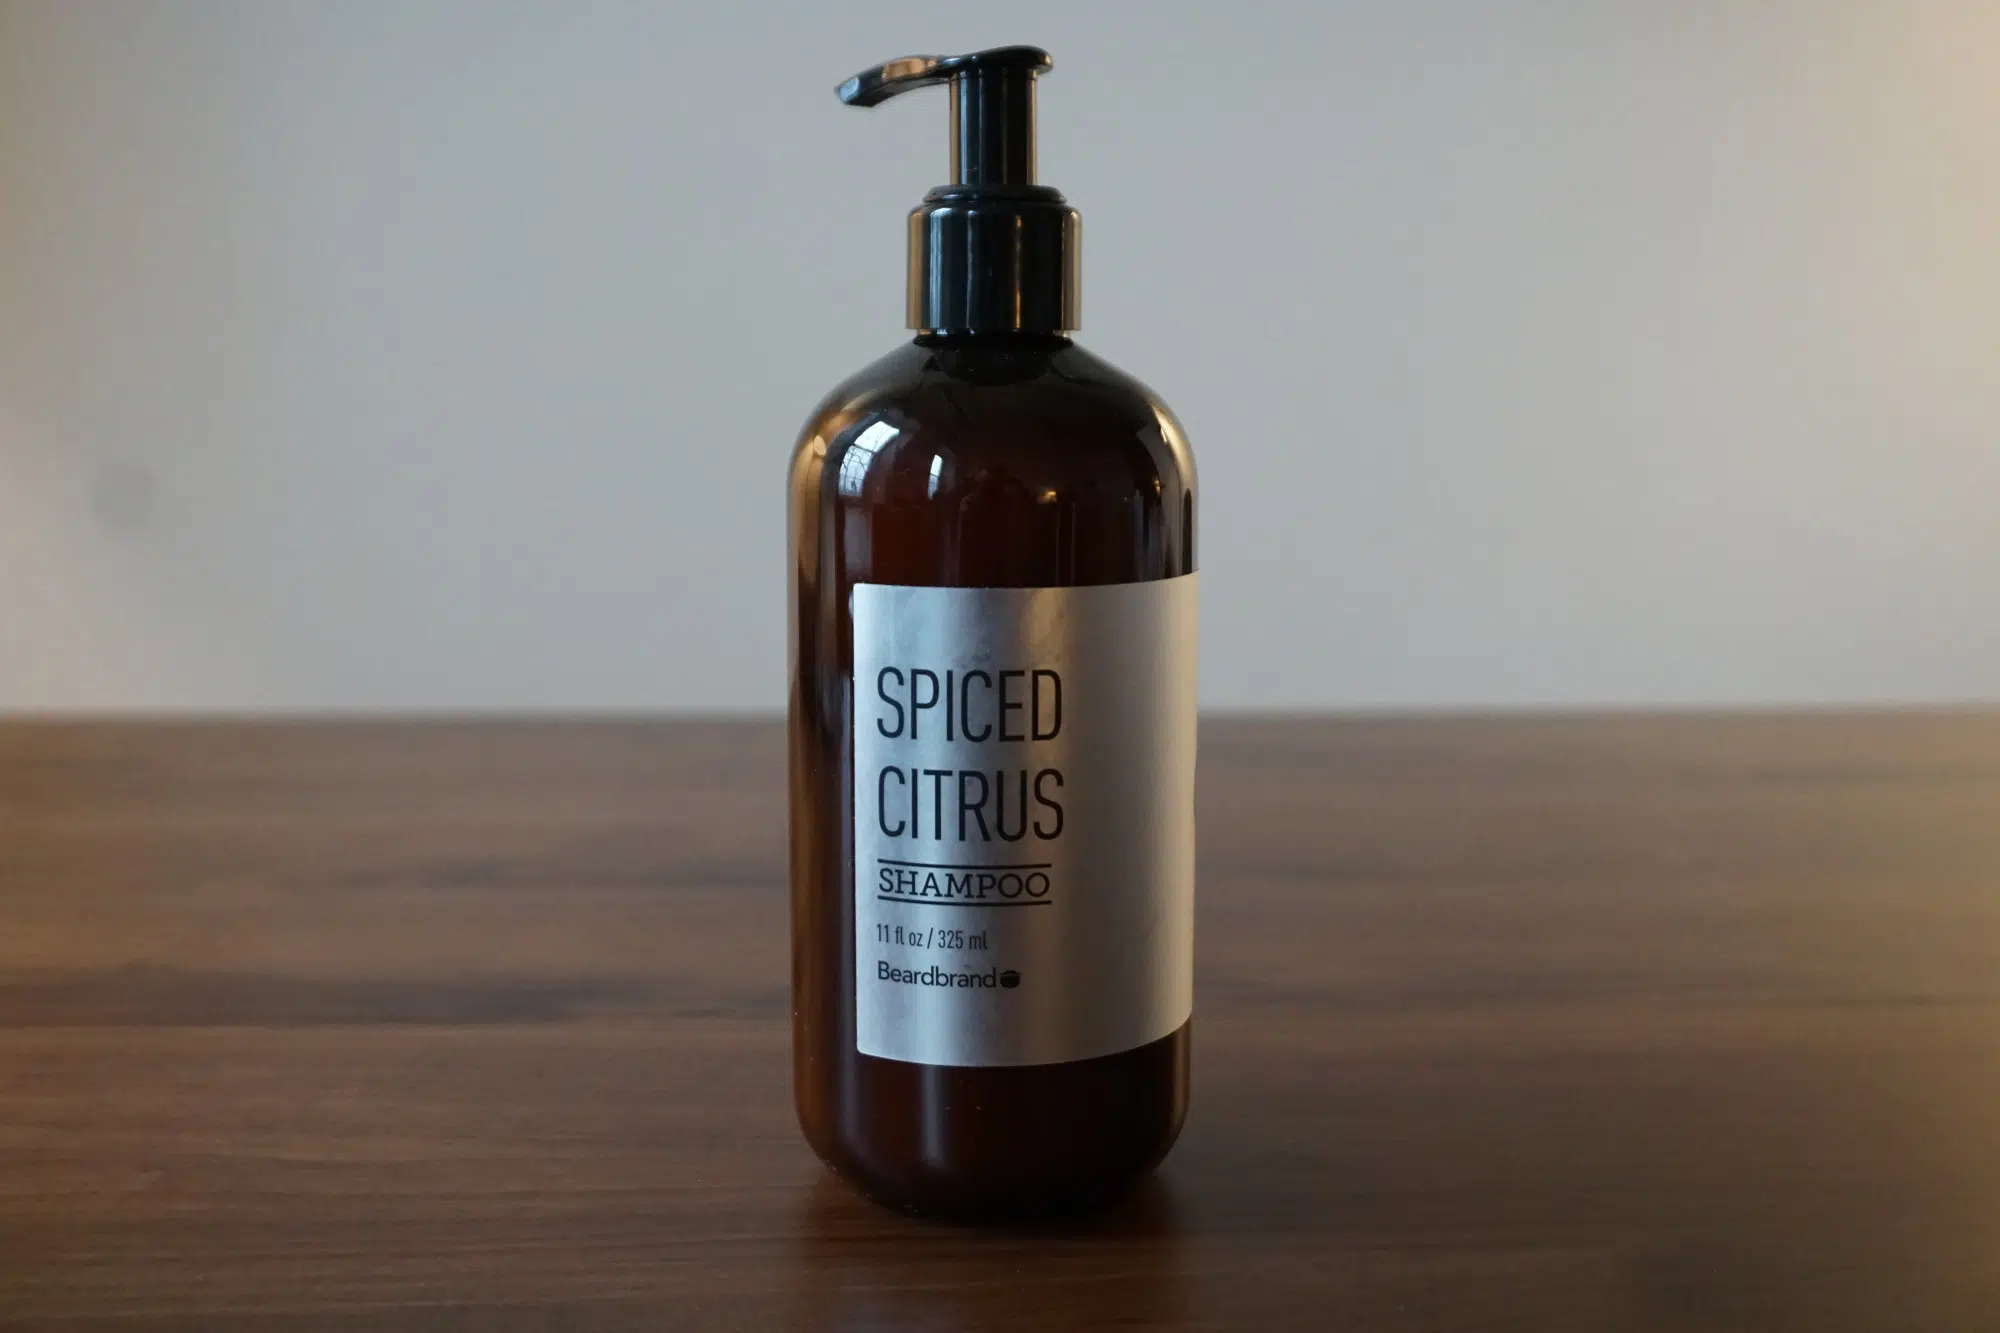 Beardbrand spiced citrus shampoo